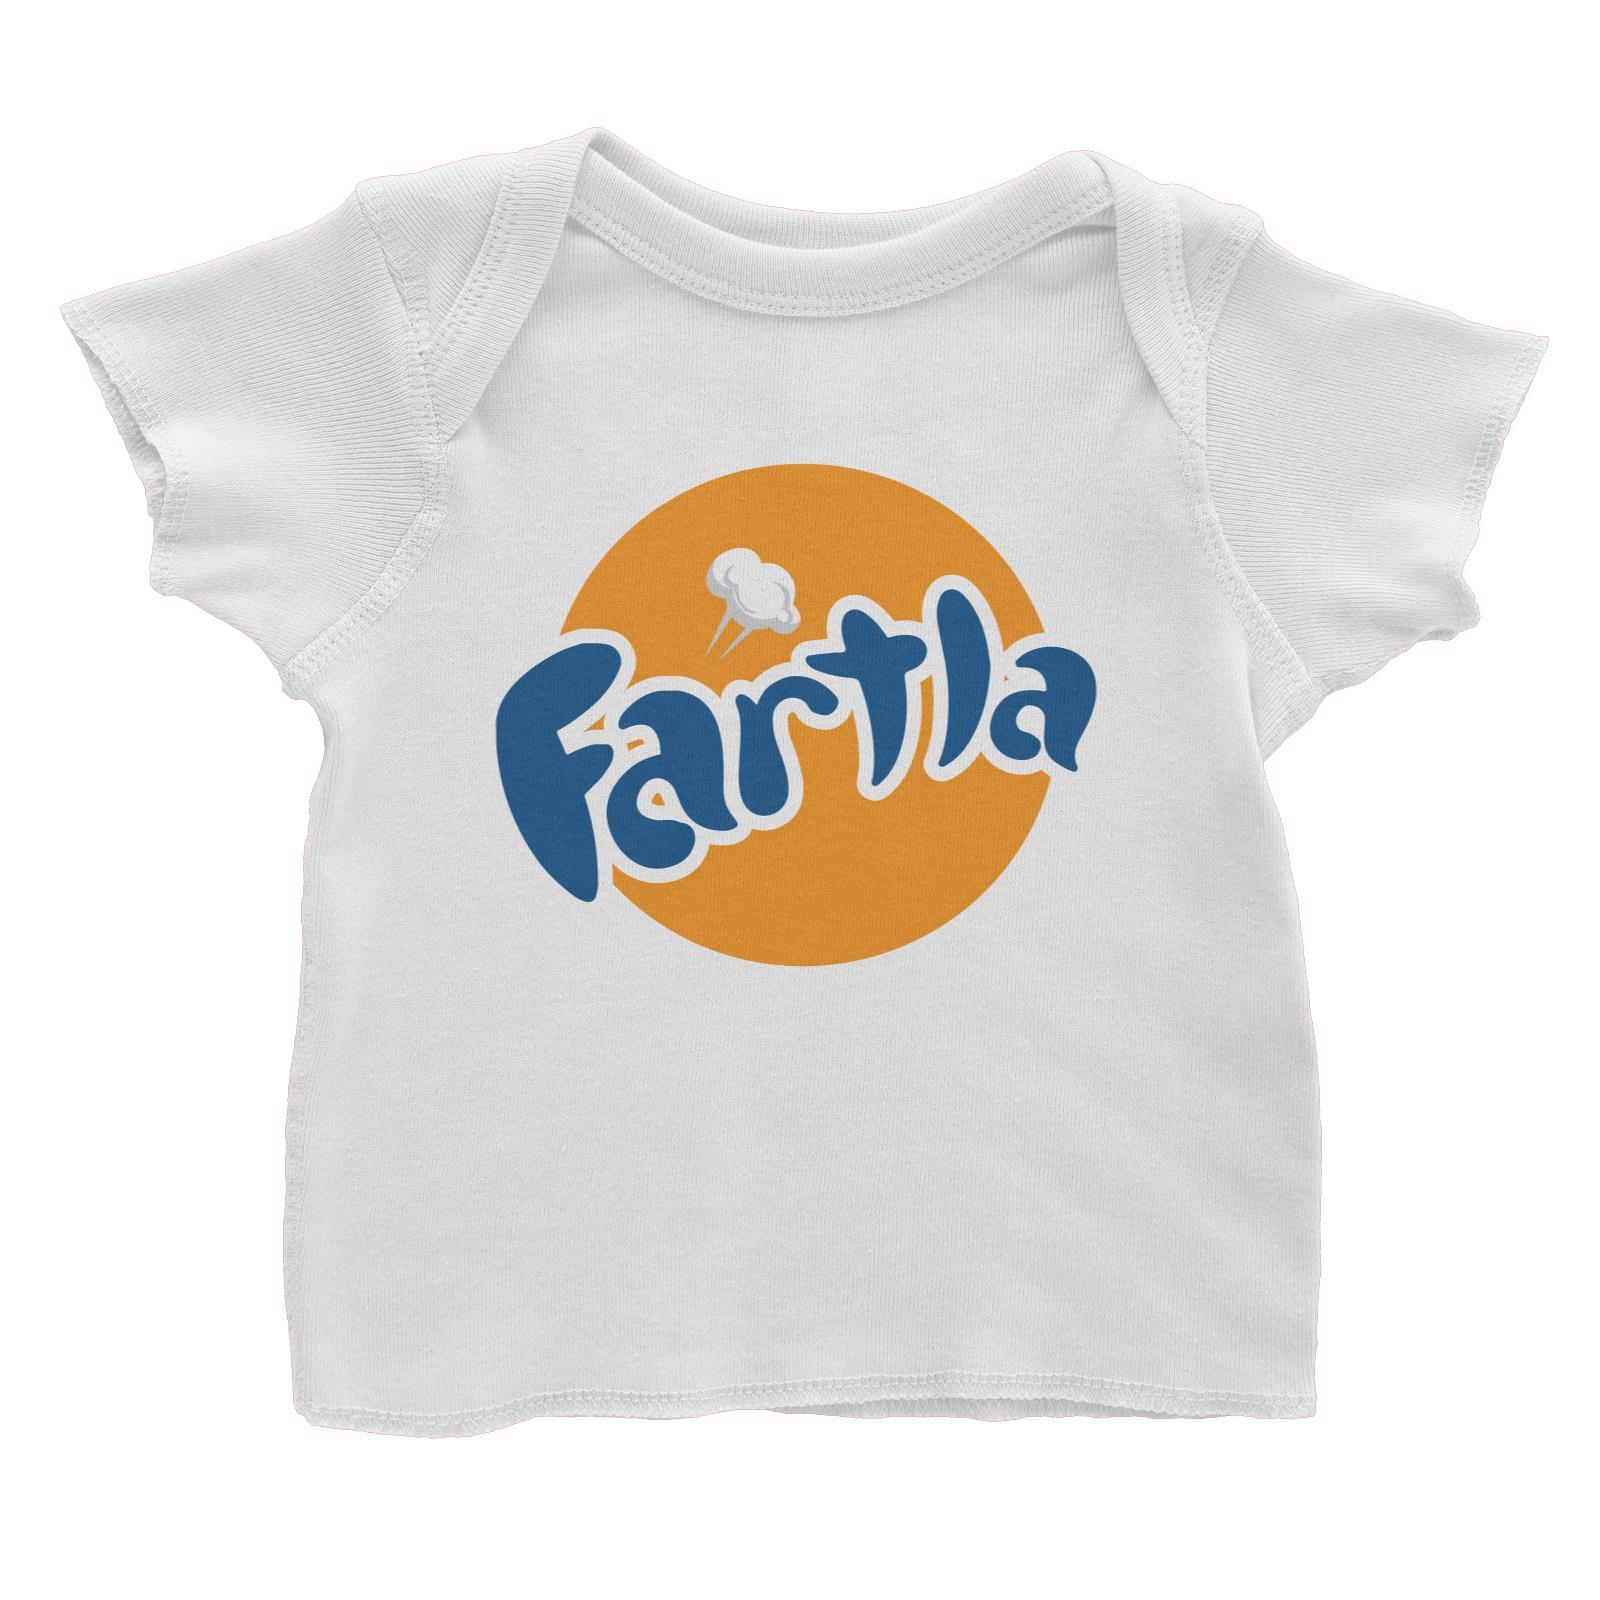 Slang Statement Fartla Baby T-Shirt